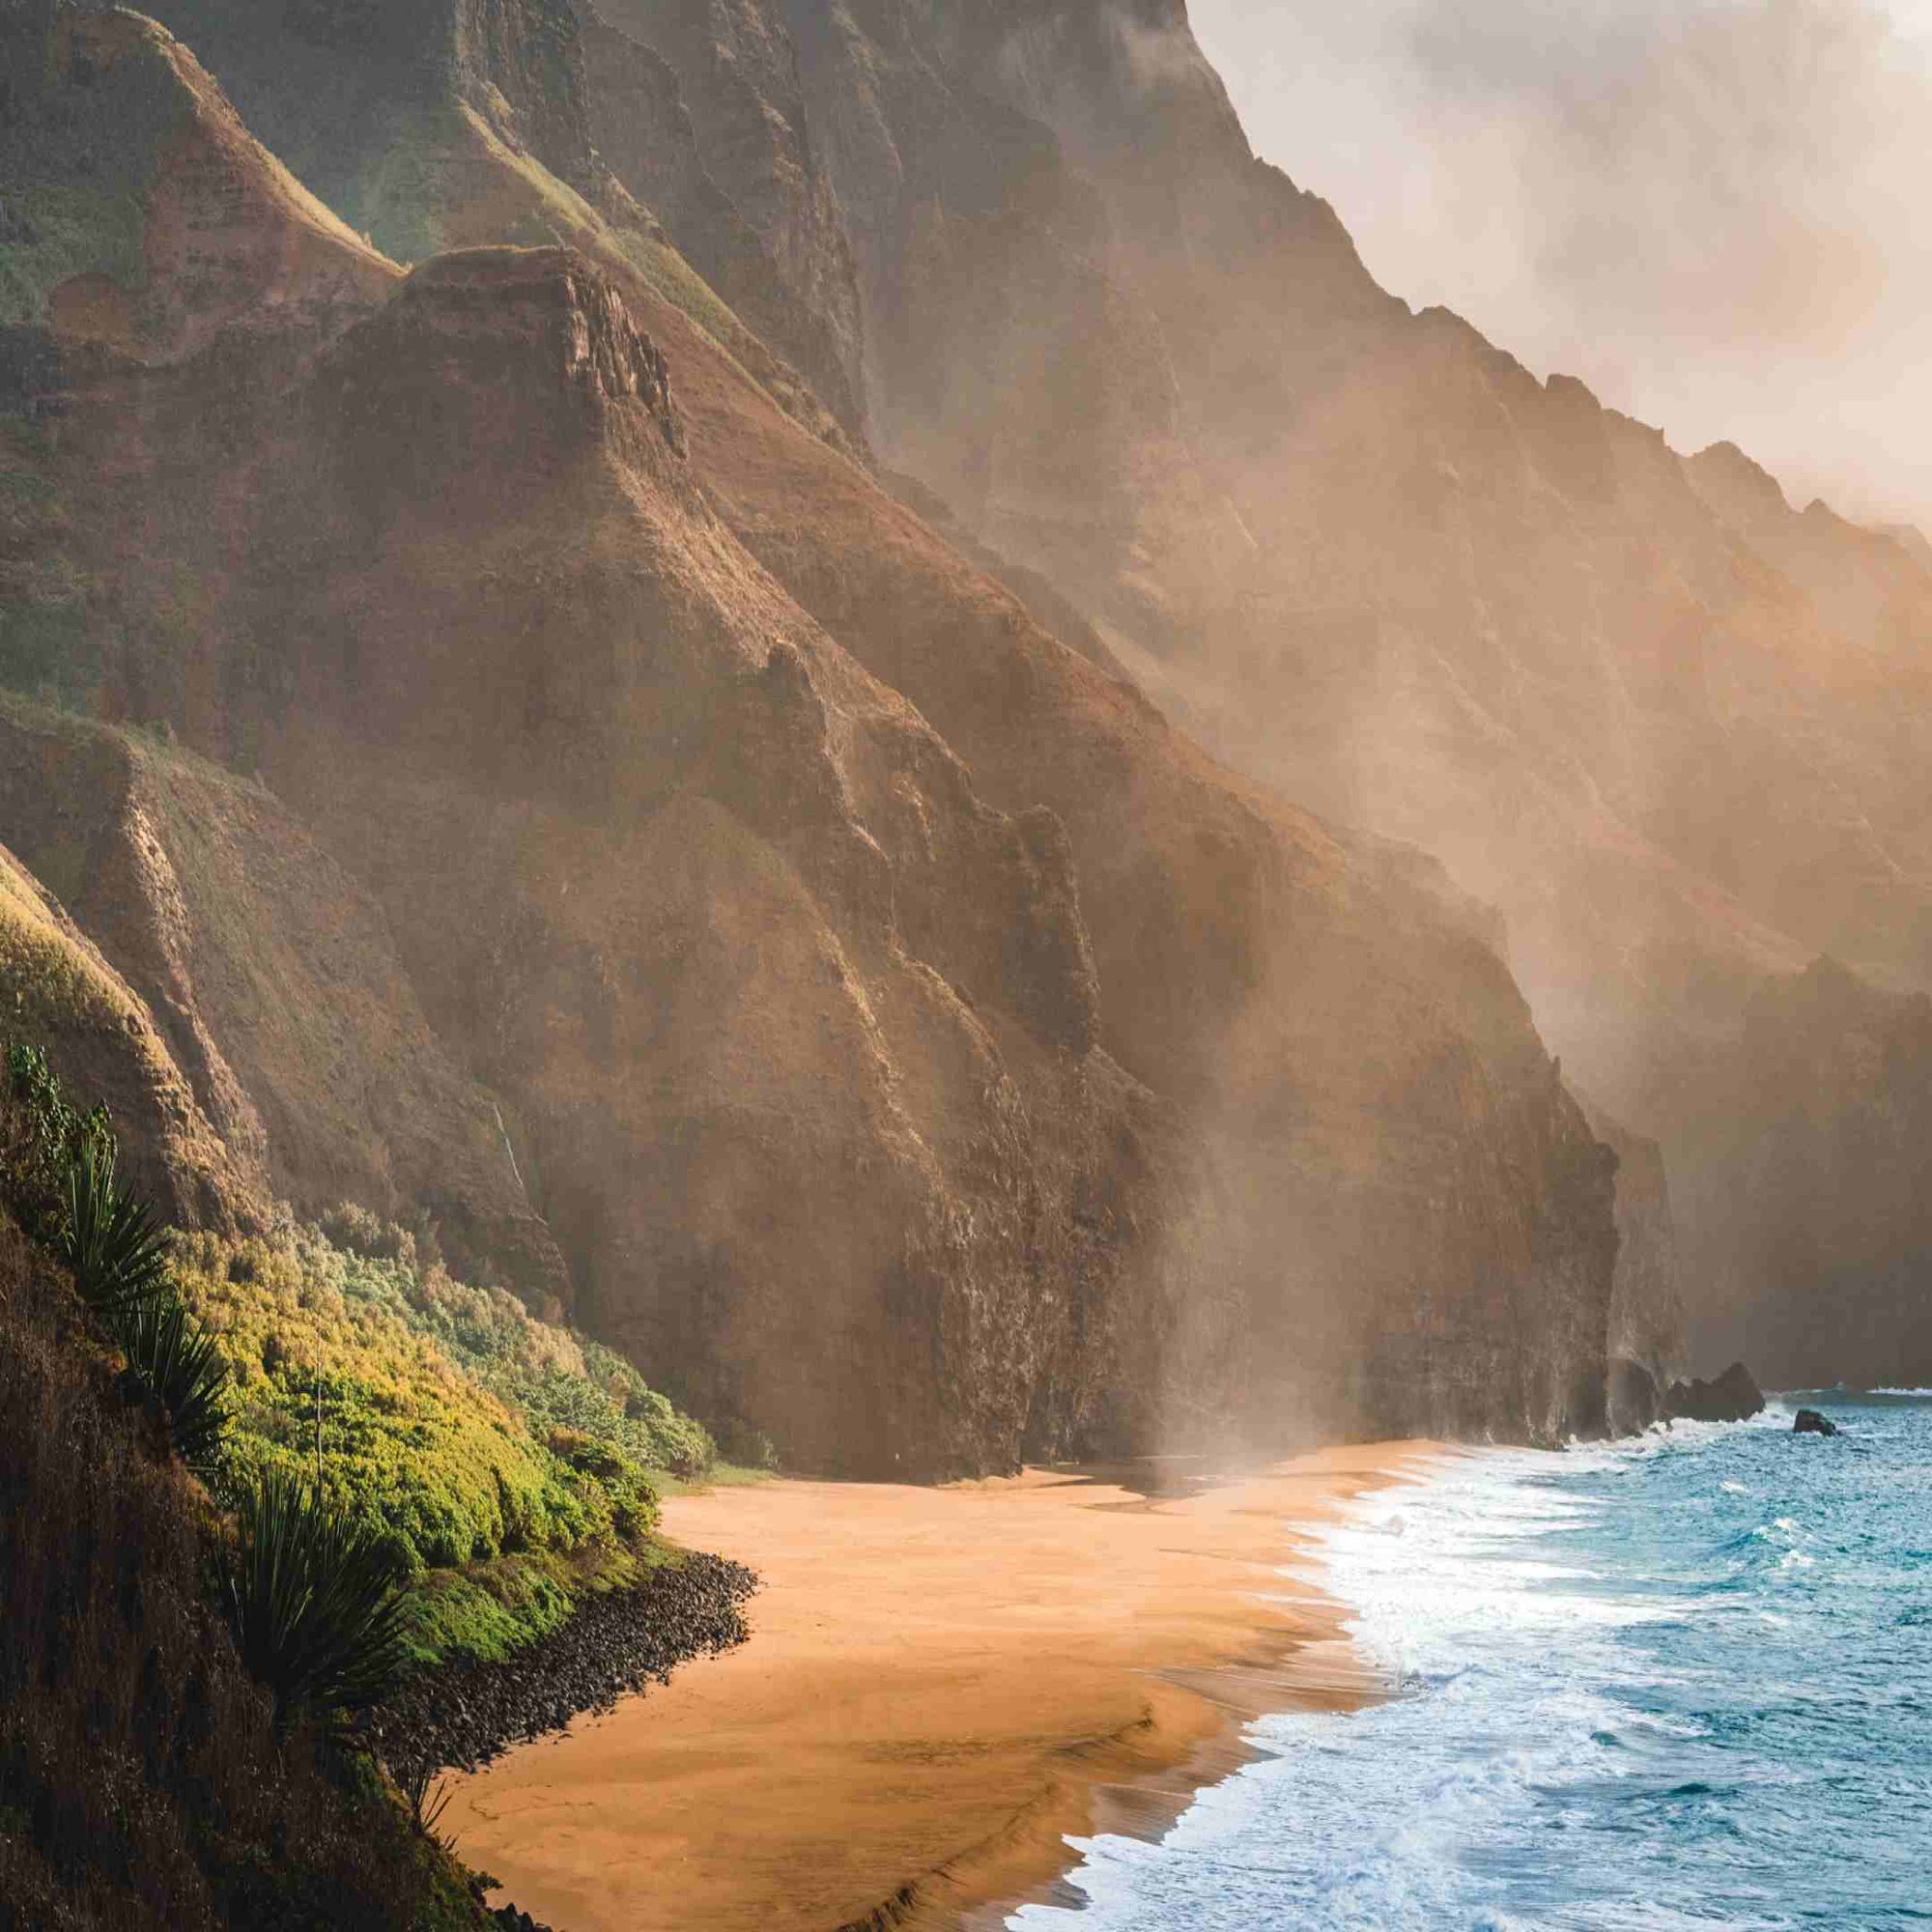 Cliffs along the NaPali Coast in Hawaii